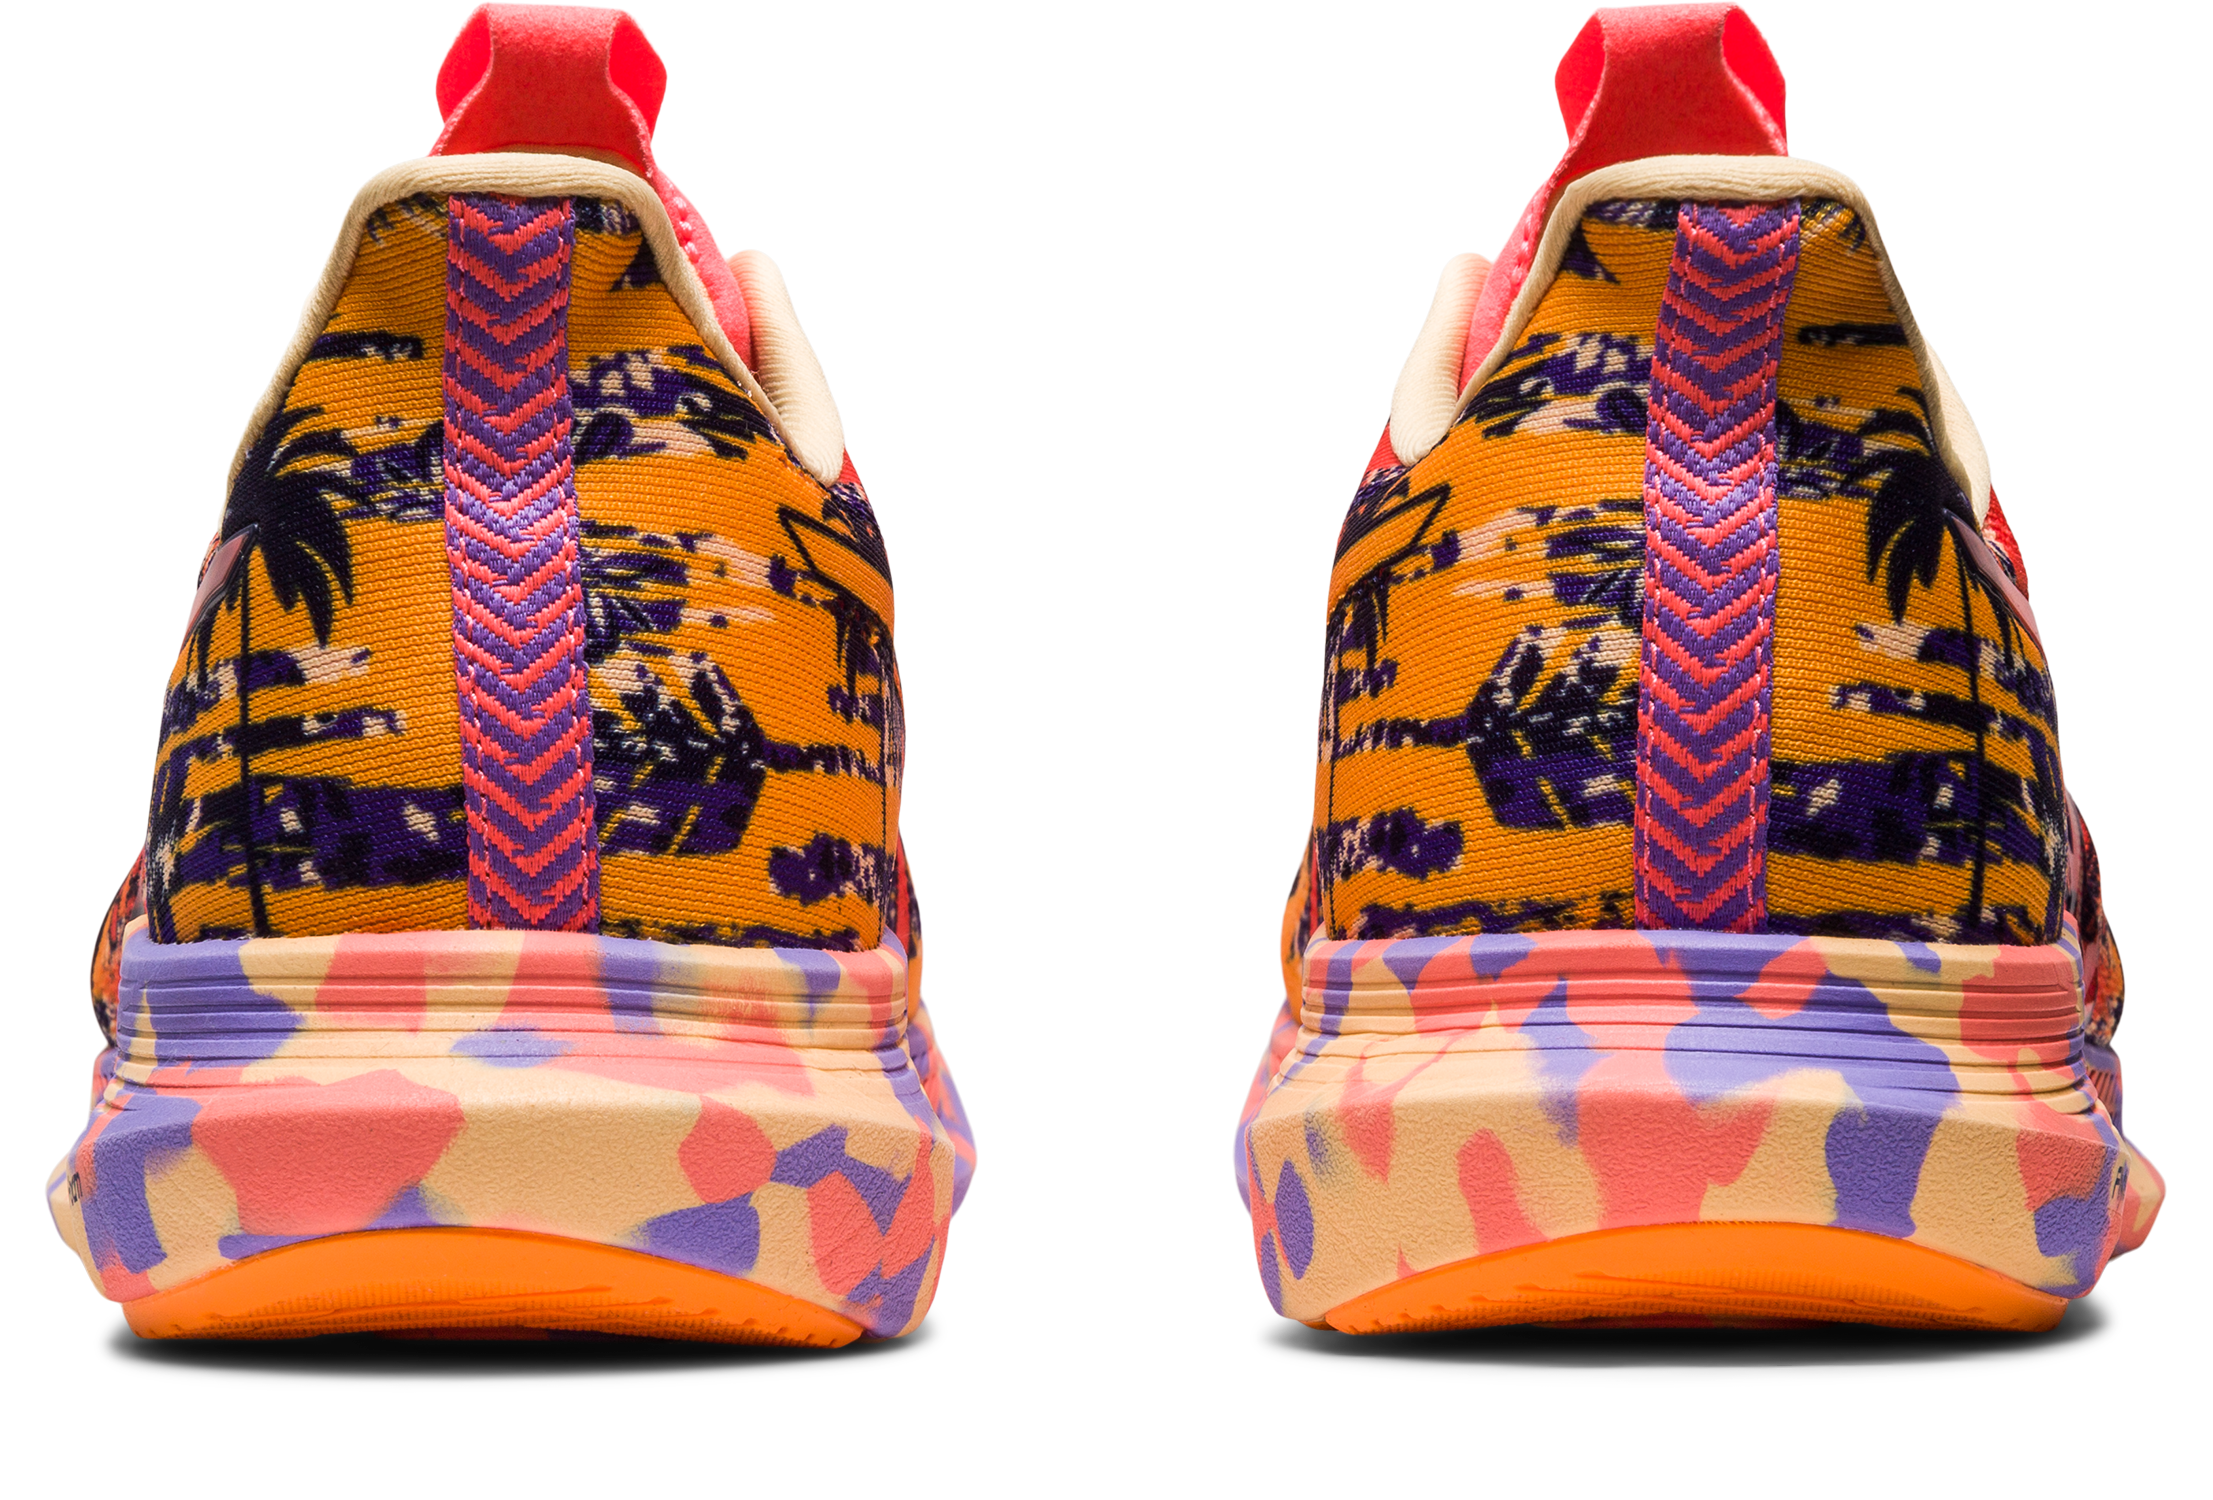 Asics Women's Gel-Noosa Tri 14 Running Shoes in Orange Pop/Blazing Coral